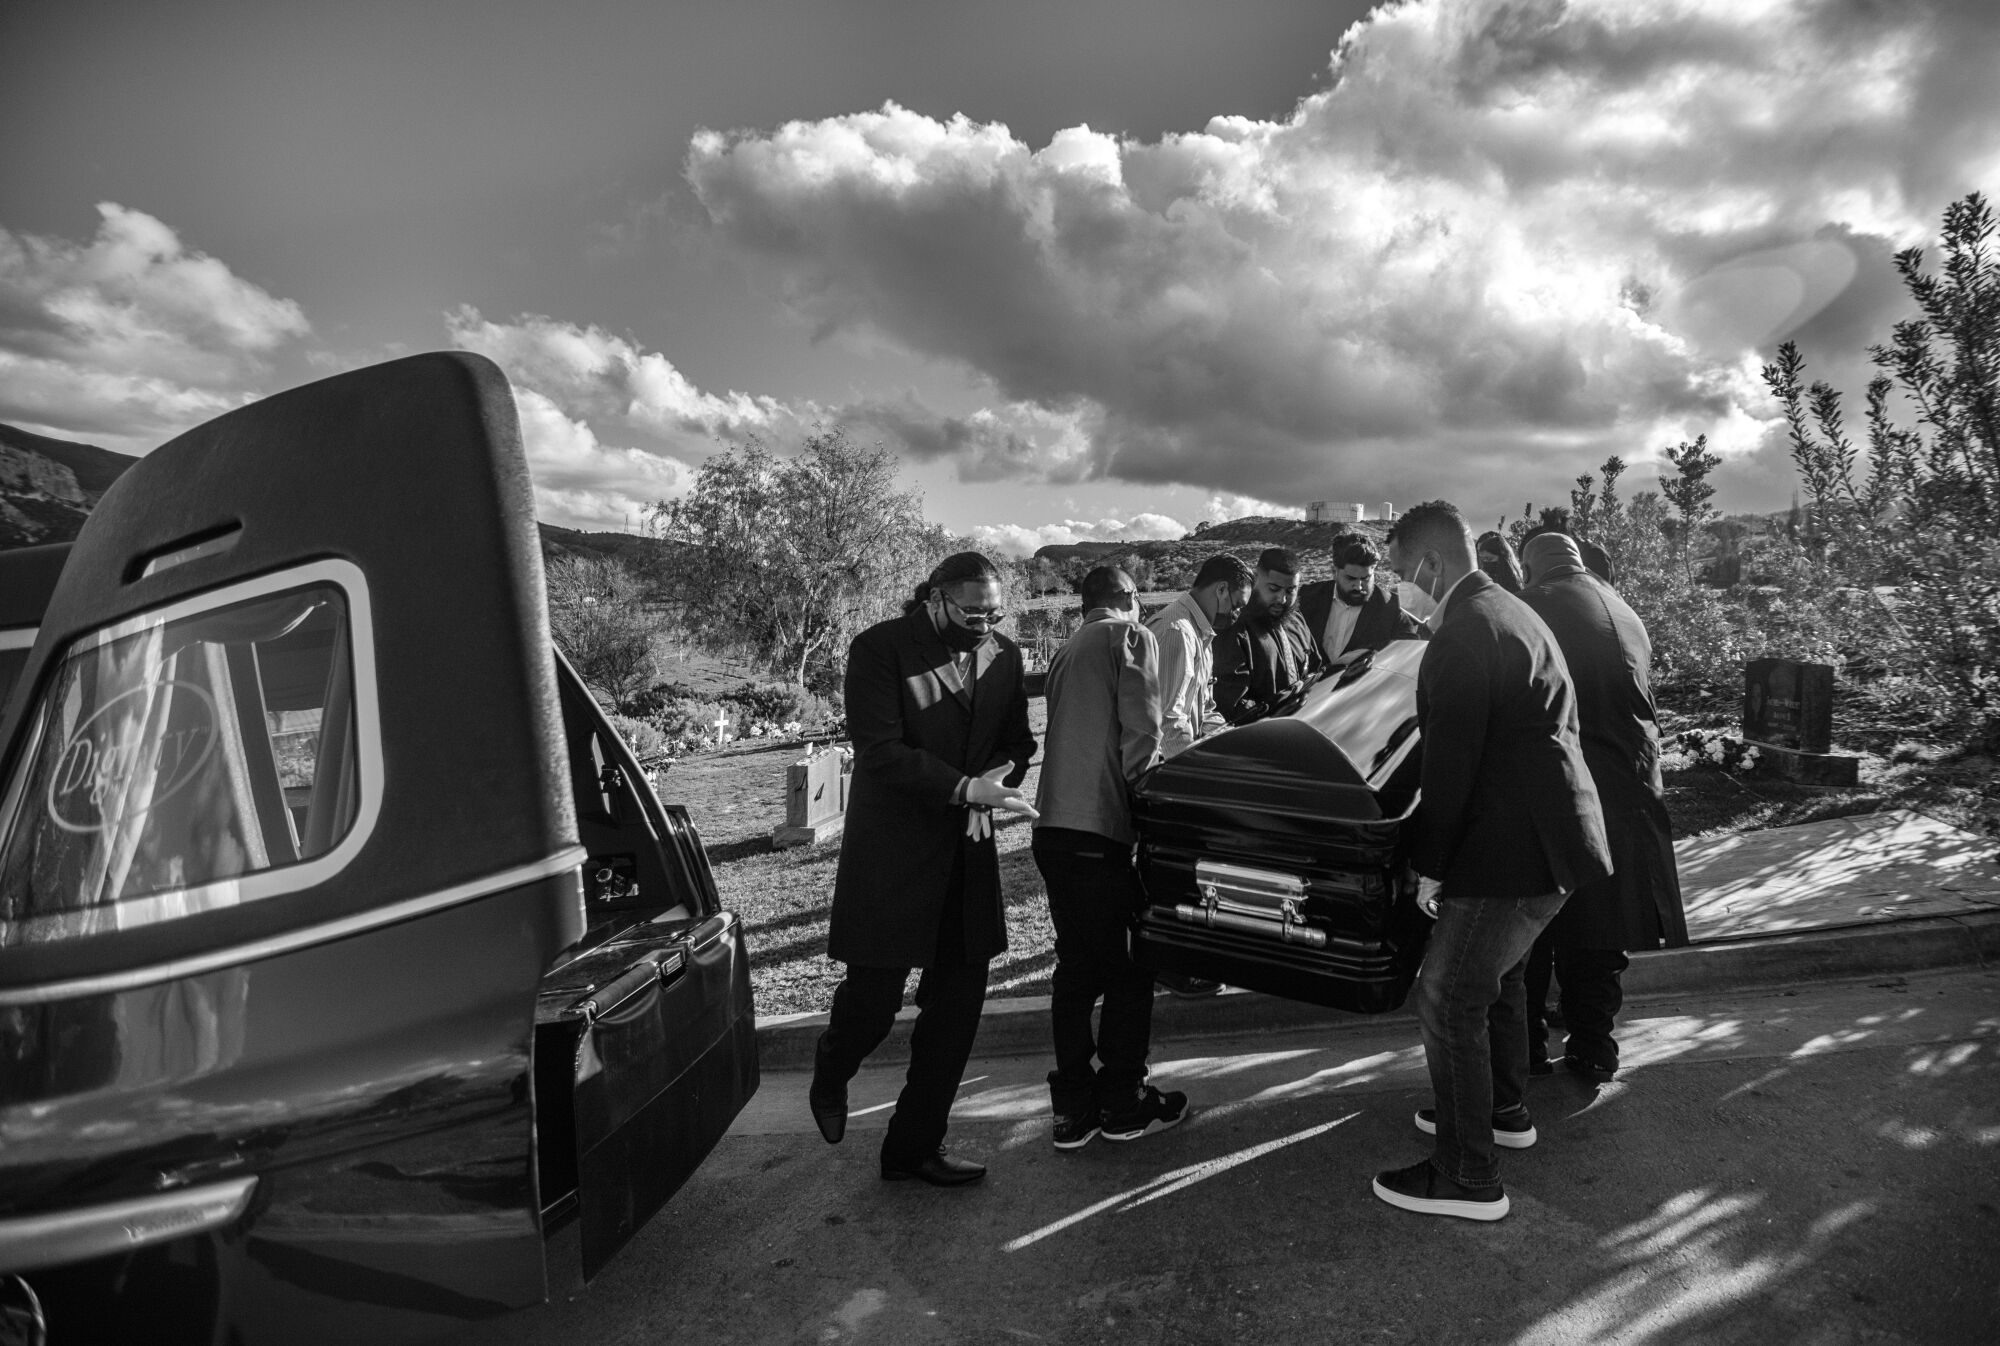 Pallbearers carry a casket toward a hearse under a cloudy sky